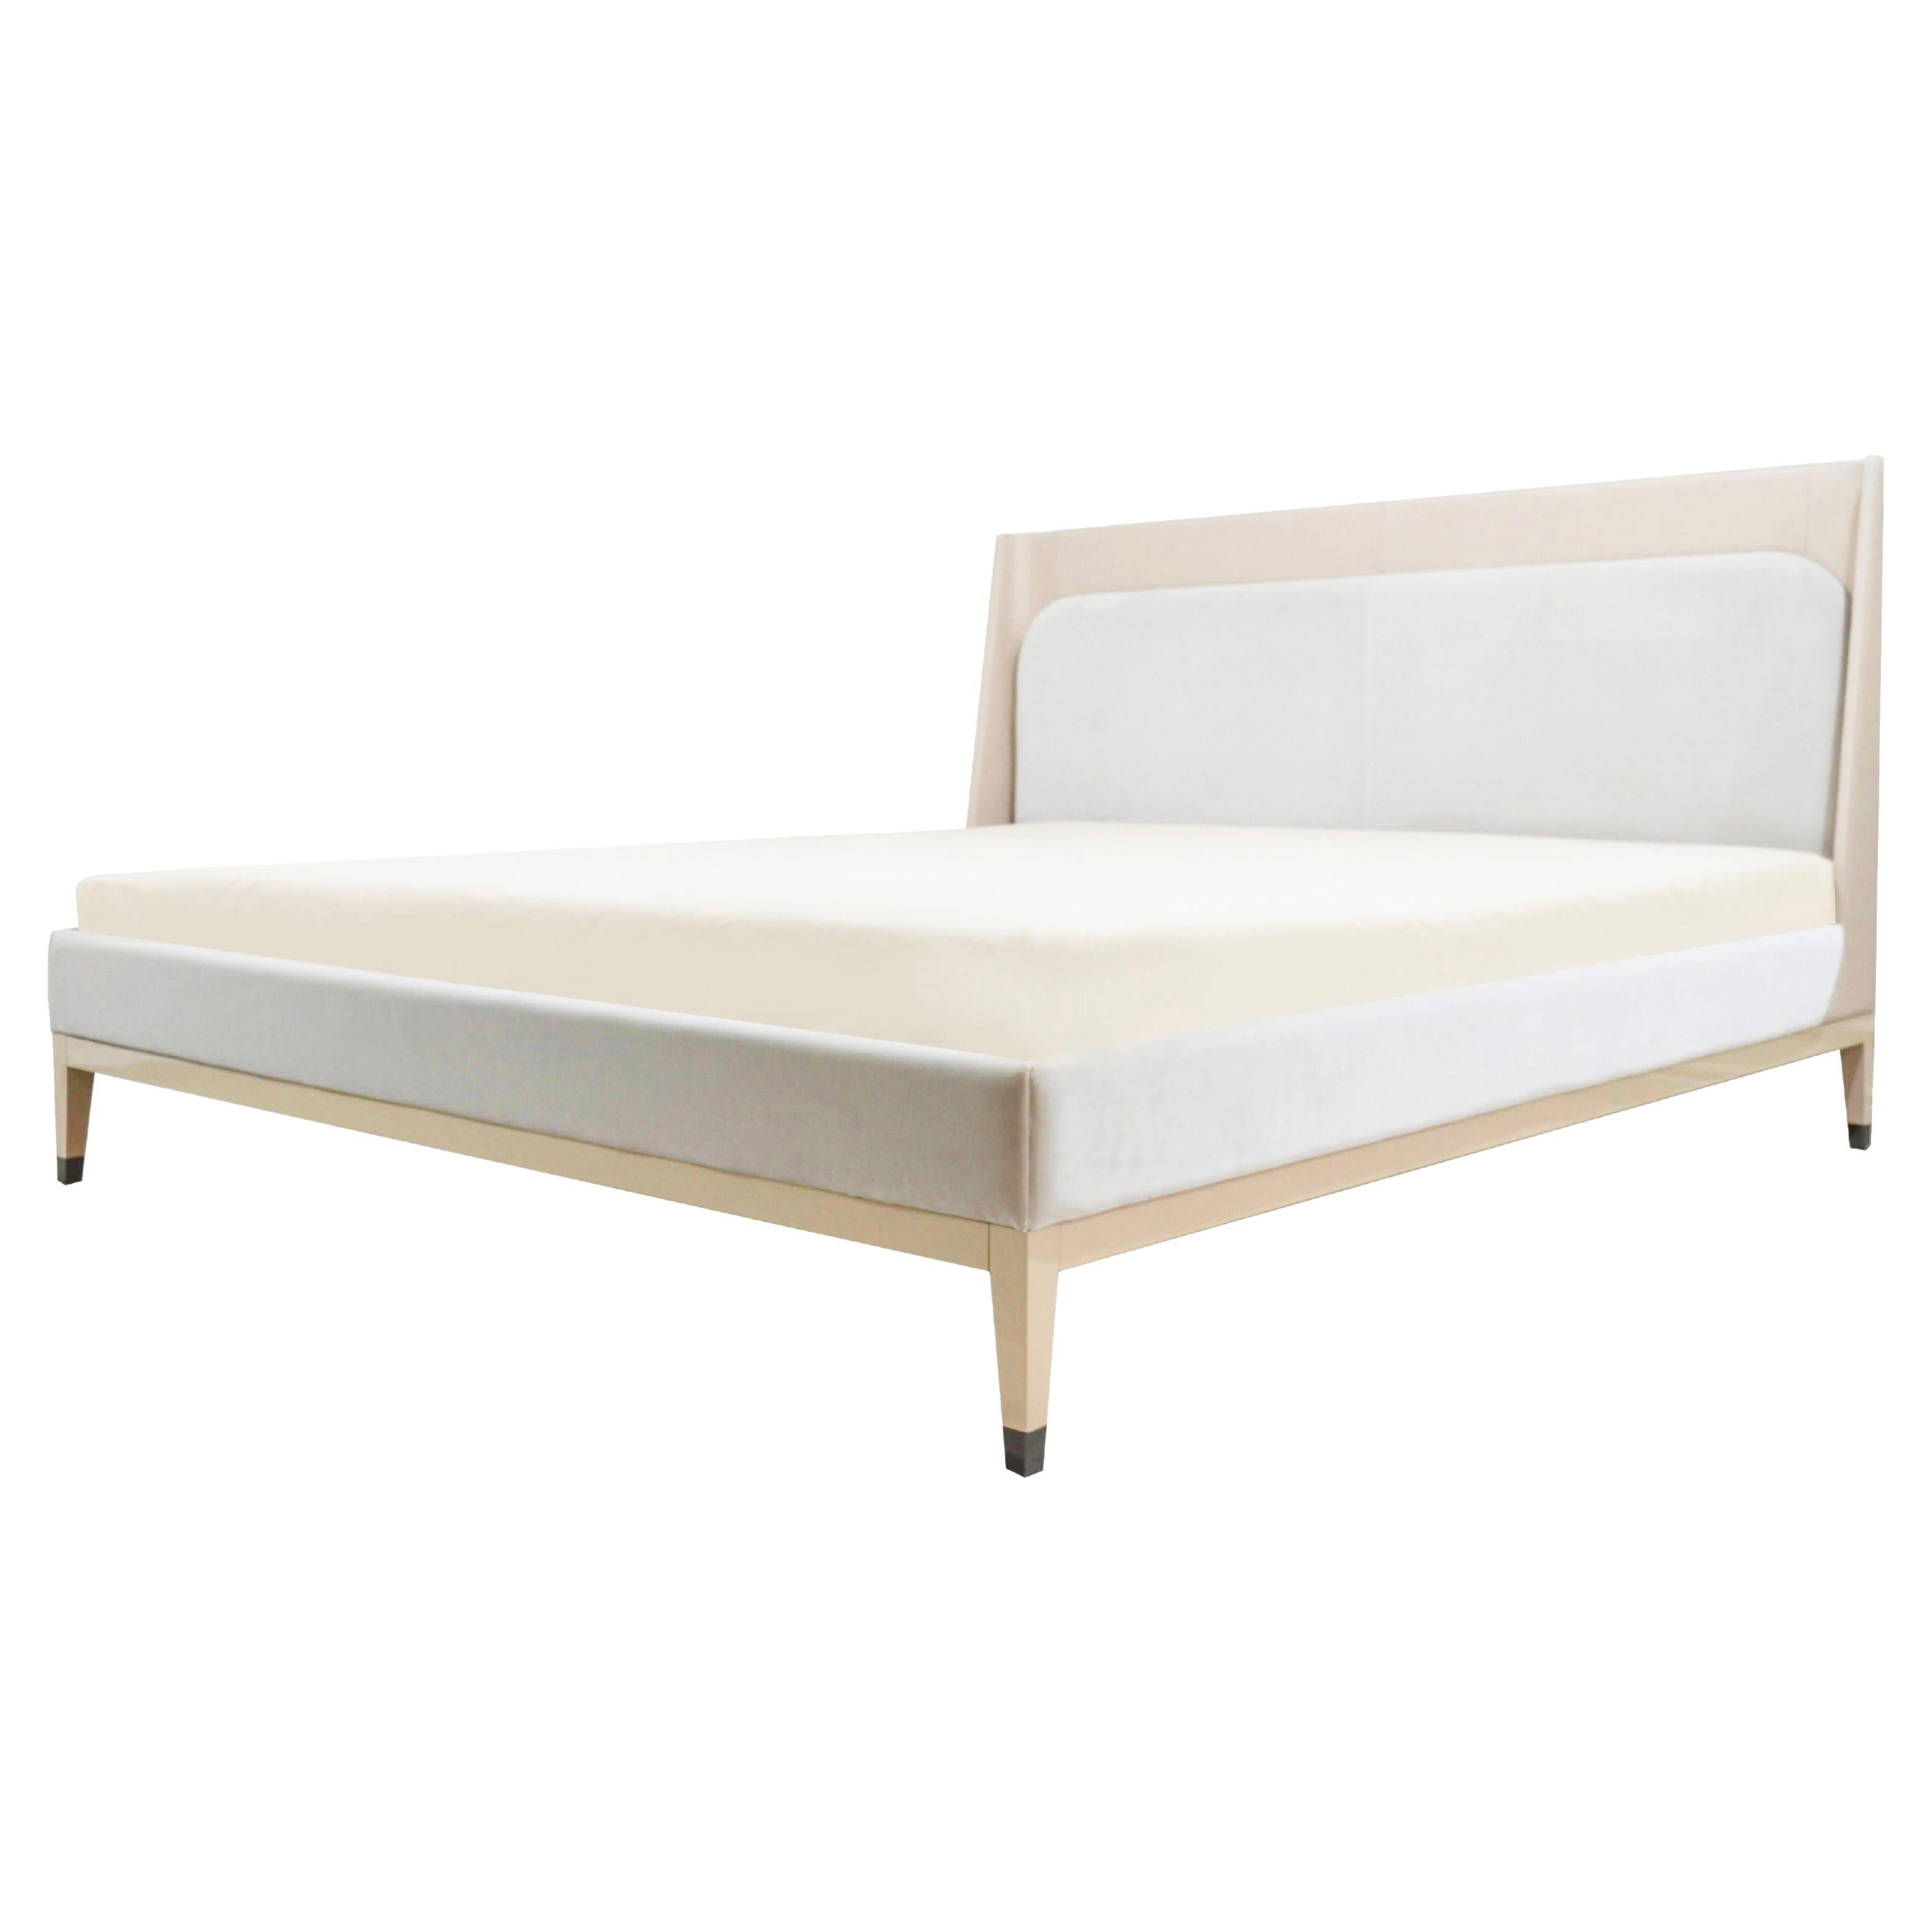 King Size Italian Bed Upholstered Nubuck and Velvet with Wooden Legs